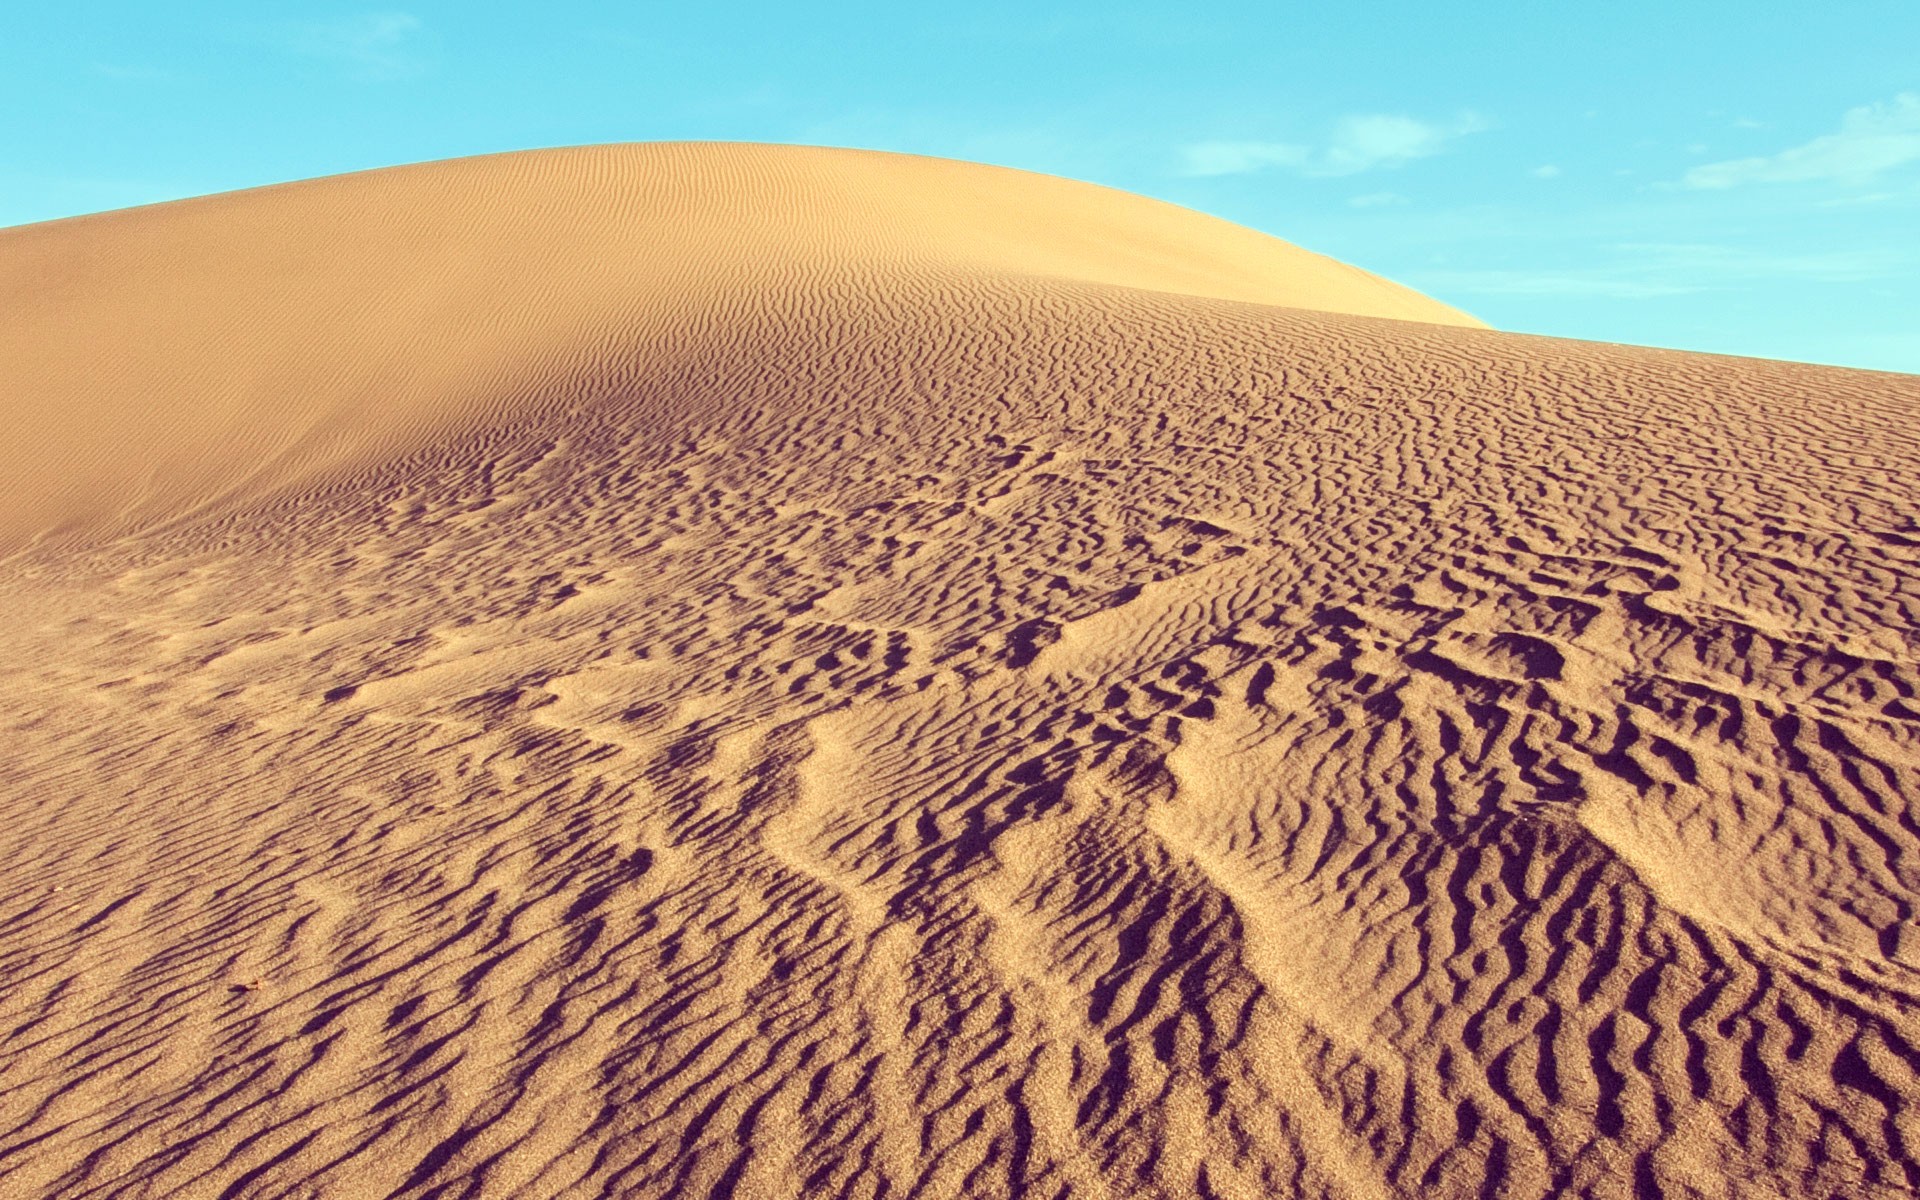 Wallpaper - Hd Quality Picture Of Desert - HD Wallpaper 